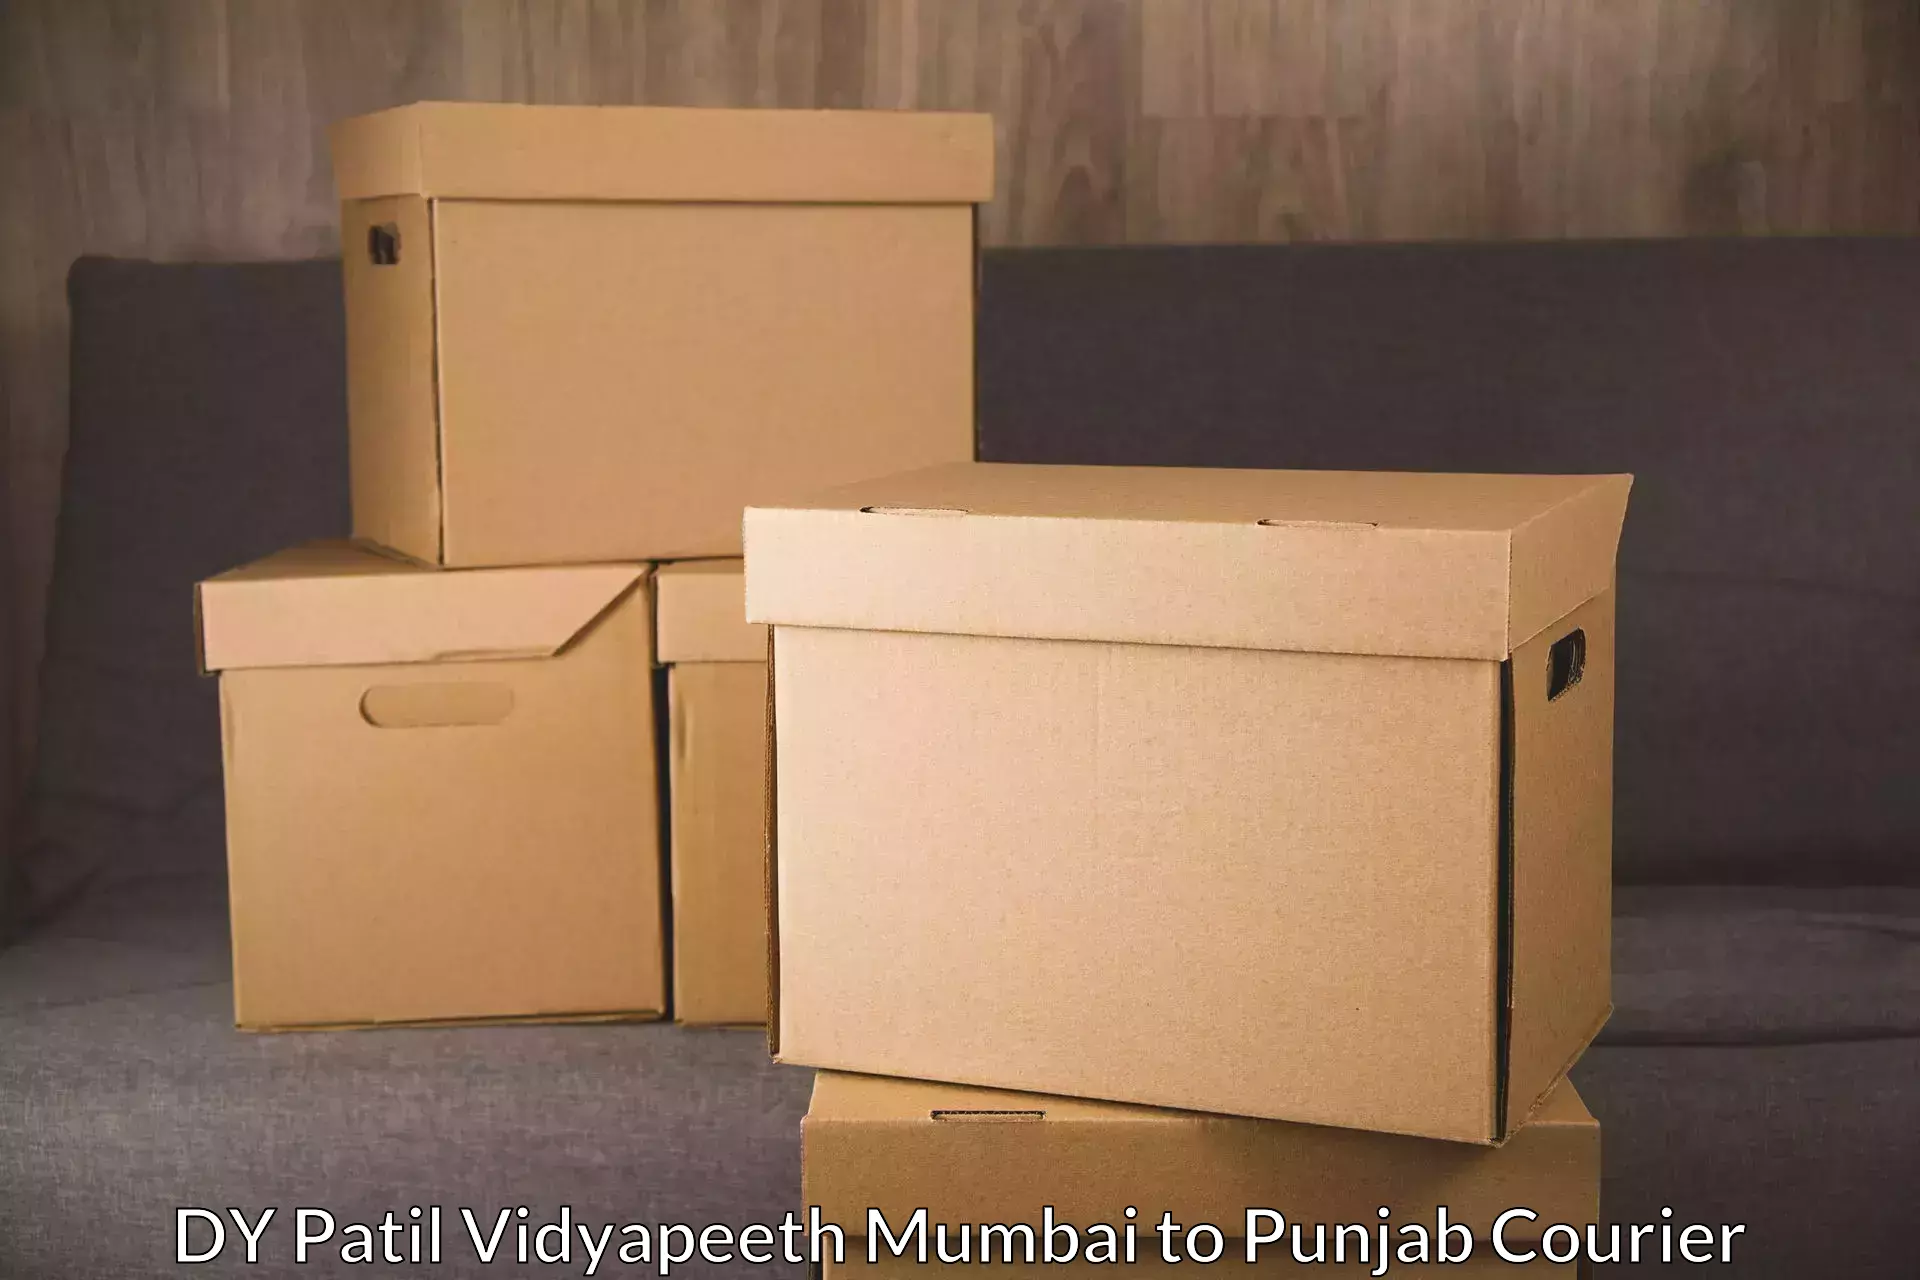 End-to-end delivery DY Patil Vidyapeeth Mumbai to Patran